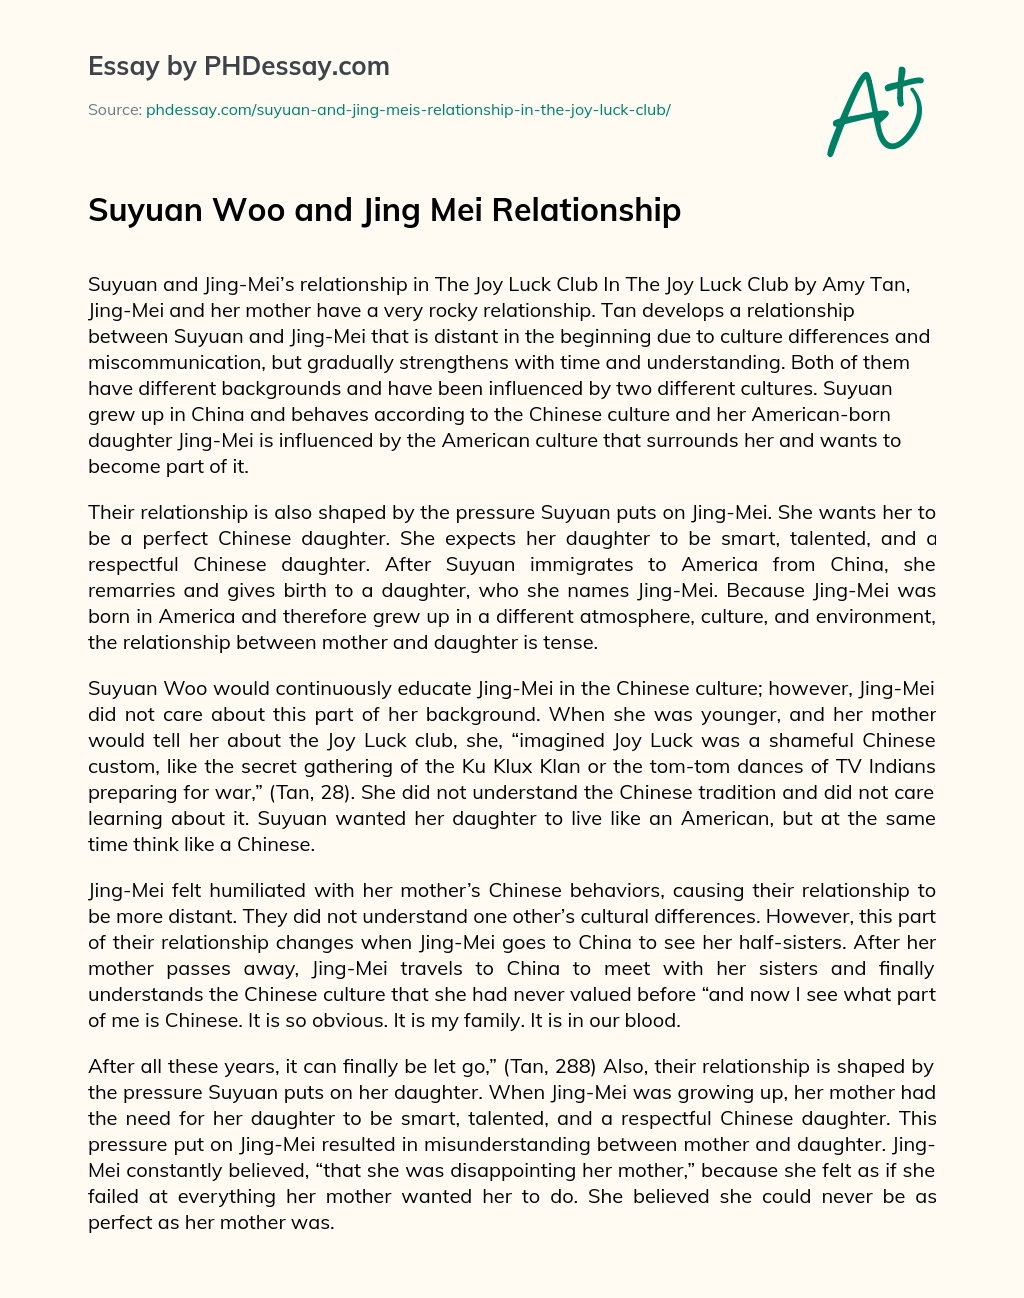 Suyuan Woo and Jing Mei Relationship essay